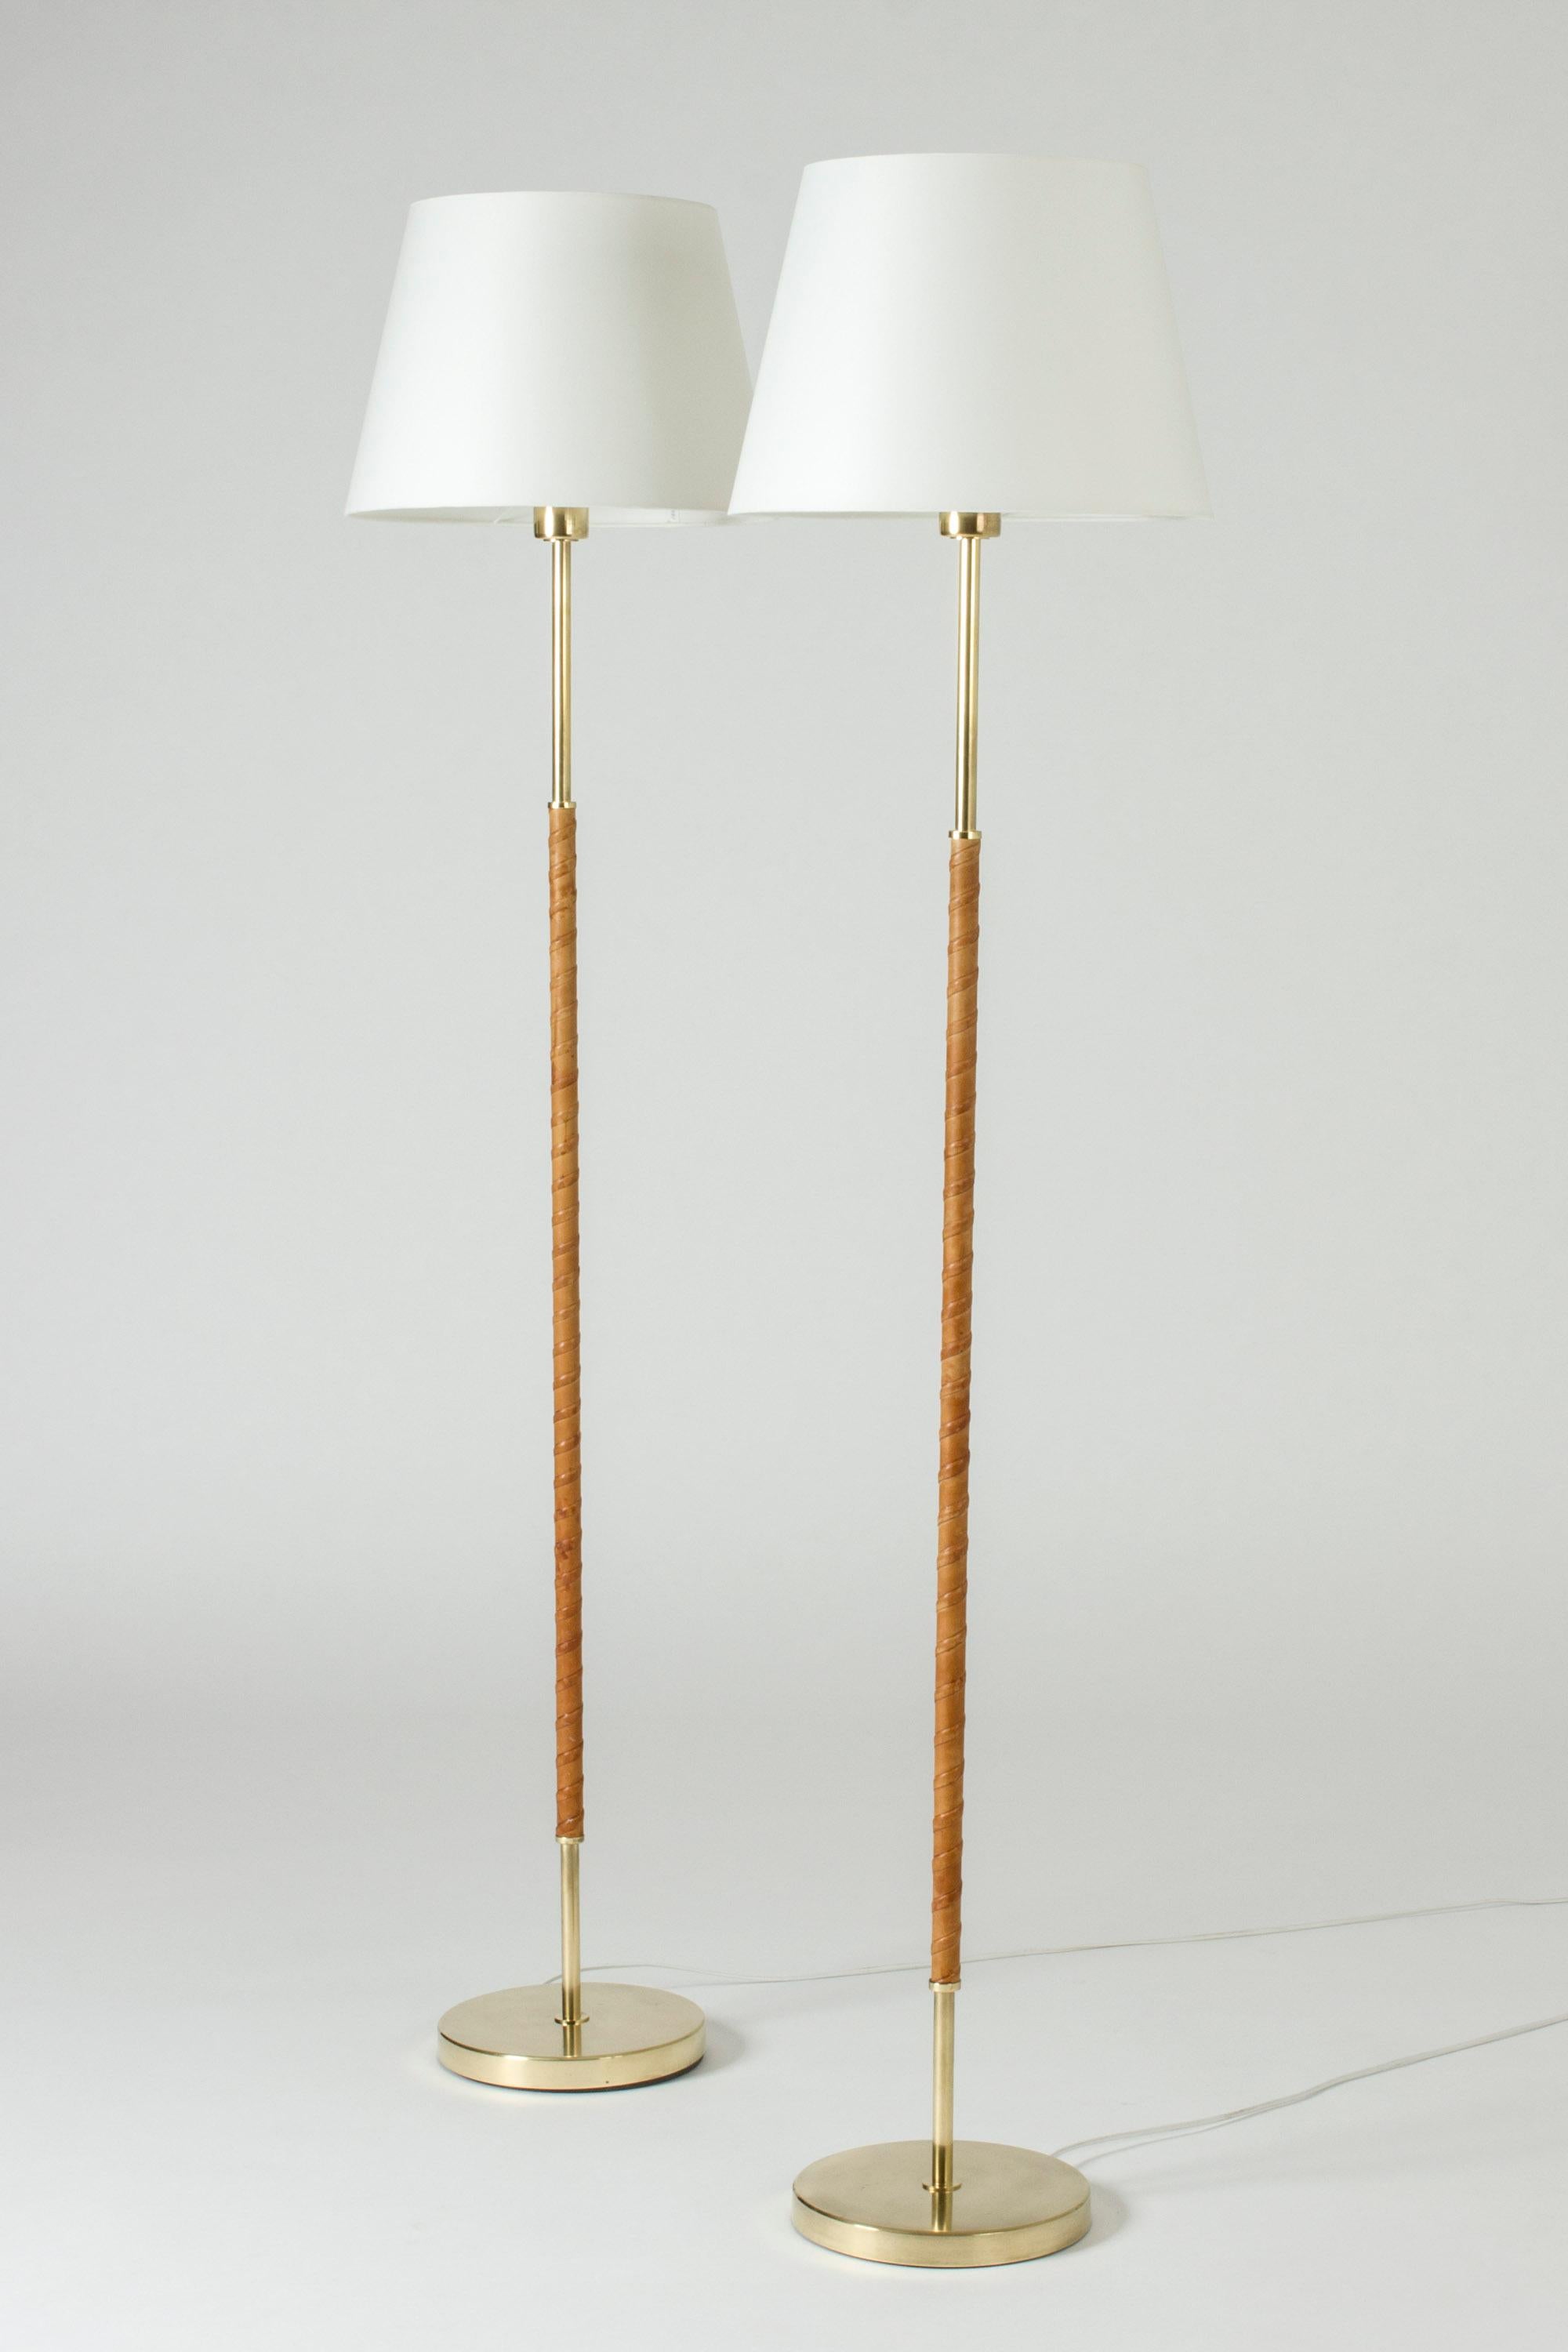 Scandinavian Modern Pair of Brass and Leather Floor Lamps from Böhlmarks, Sweden, 1950s